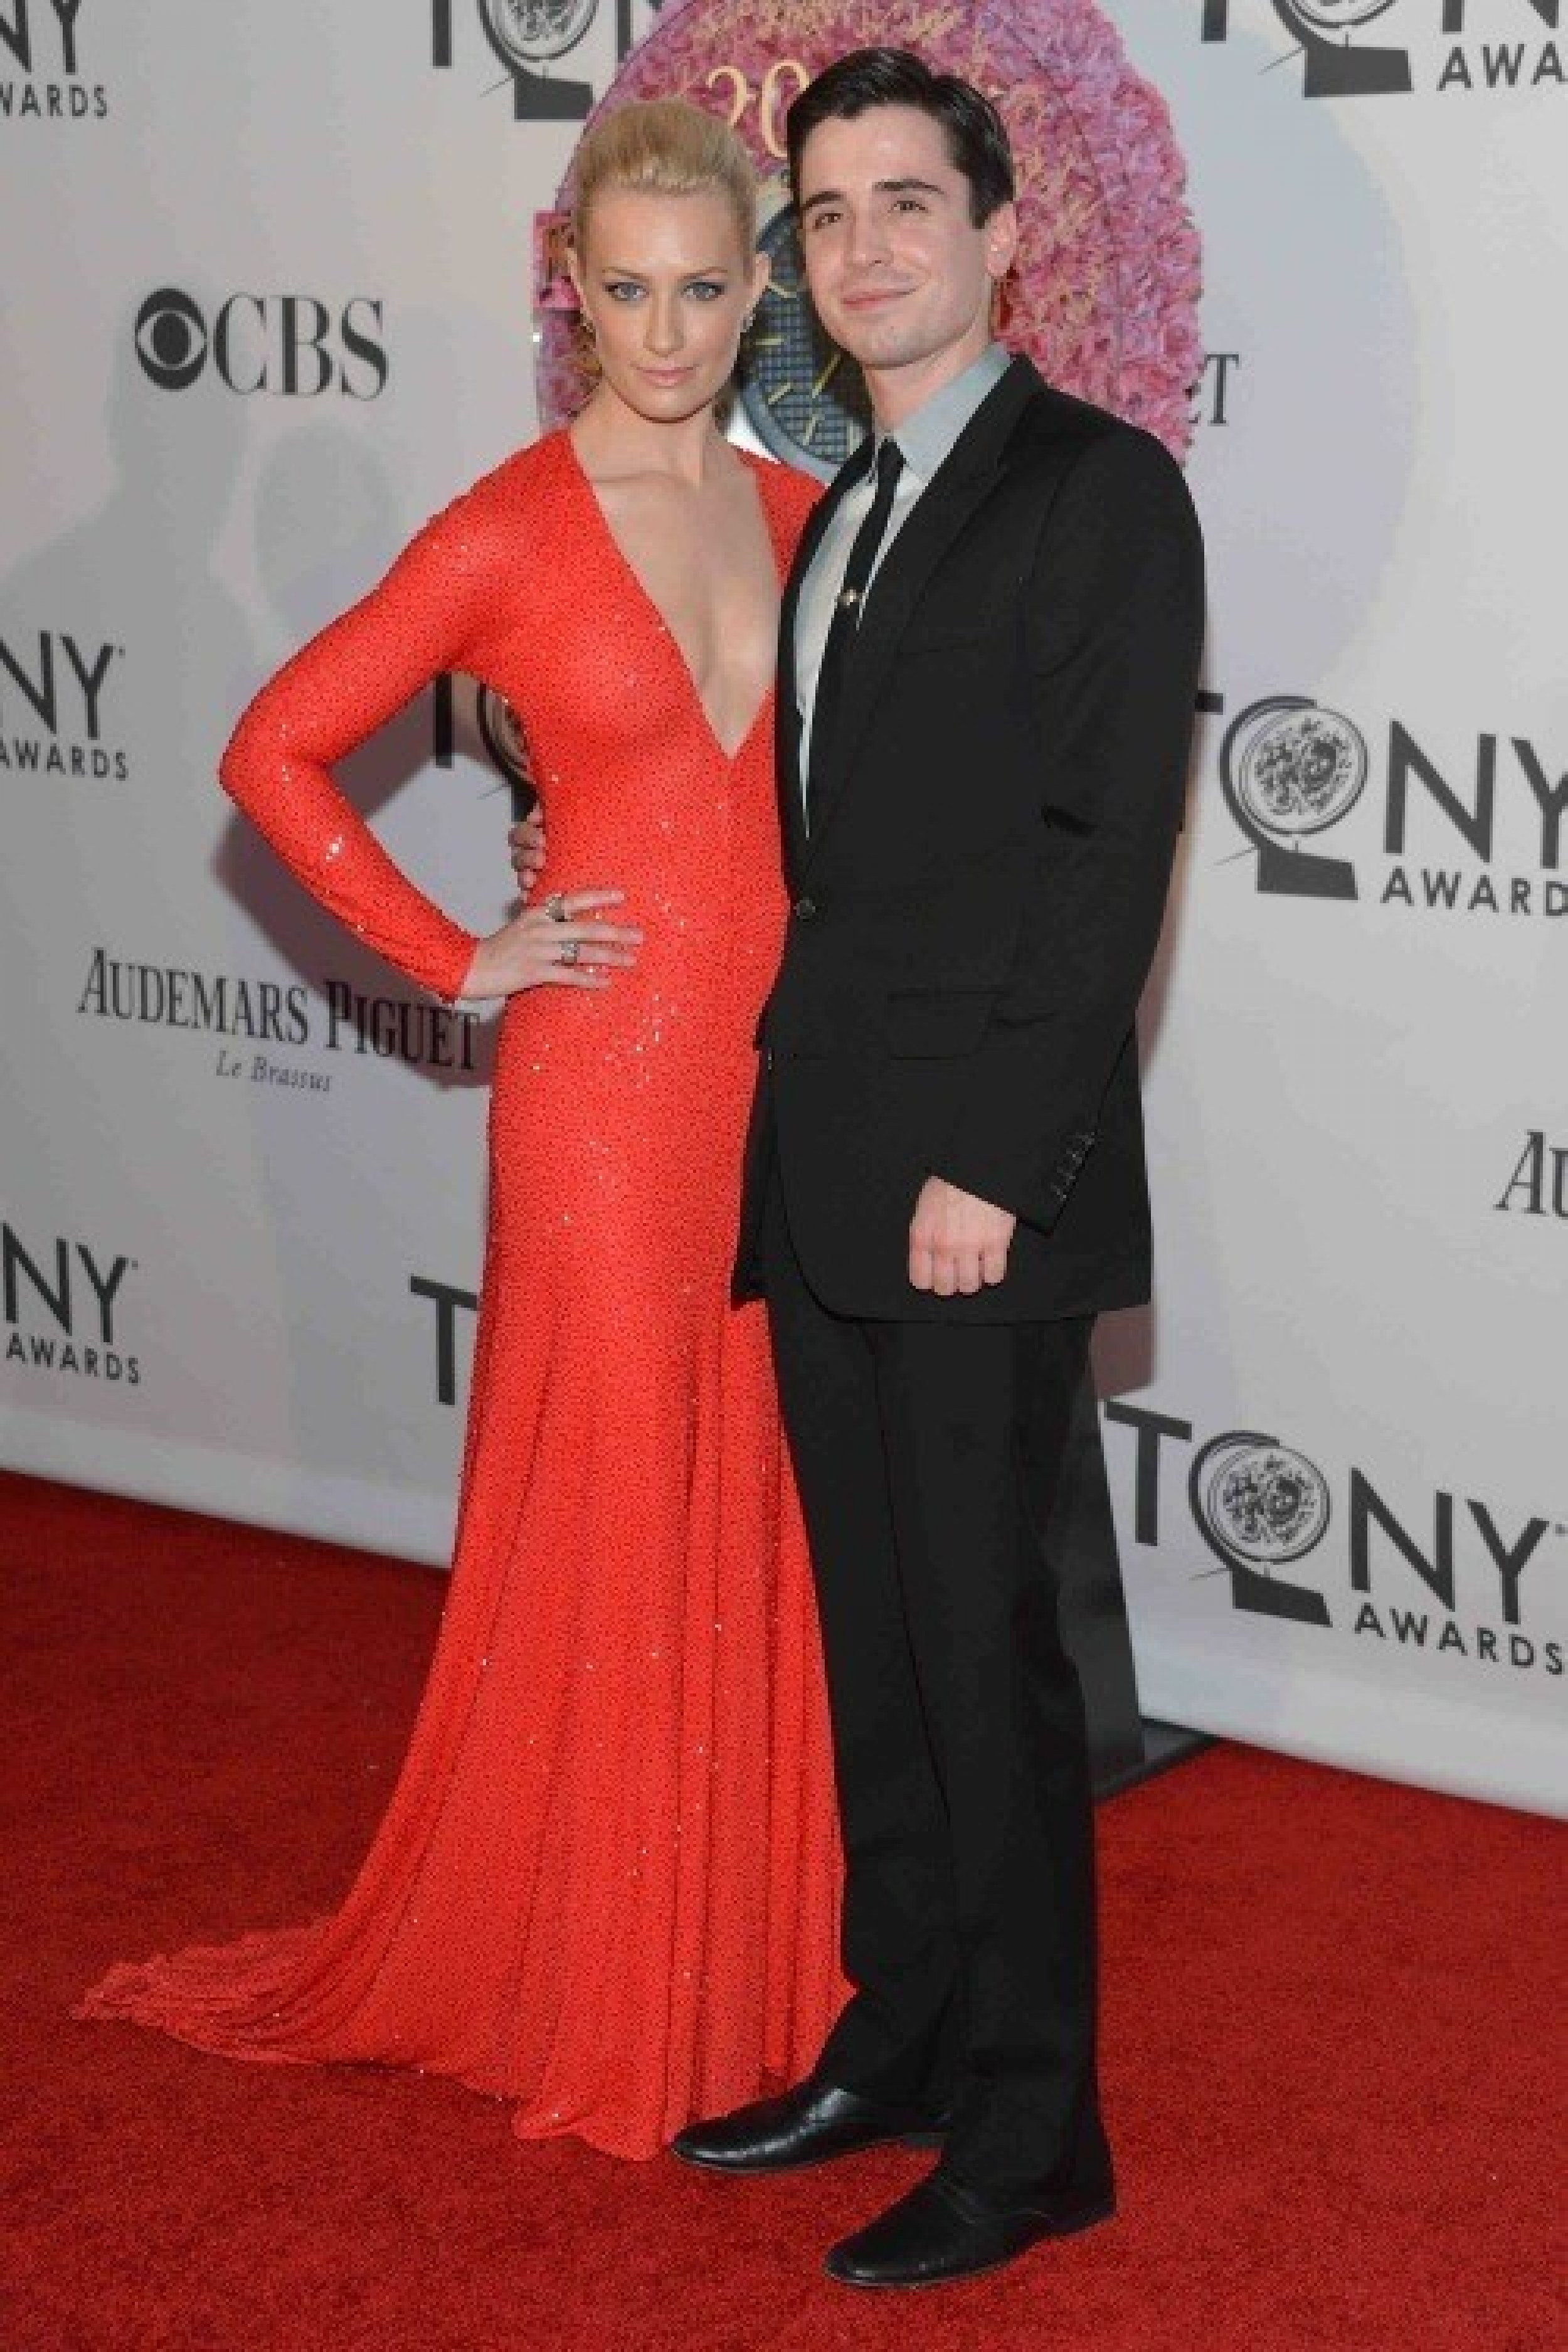 Tony Awards 2012 Best Dressed